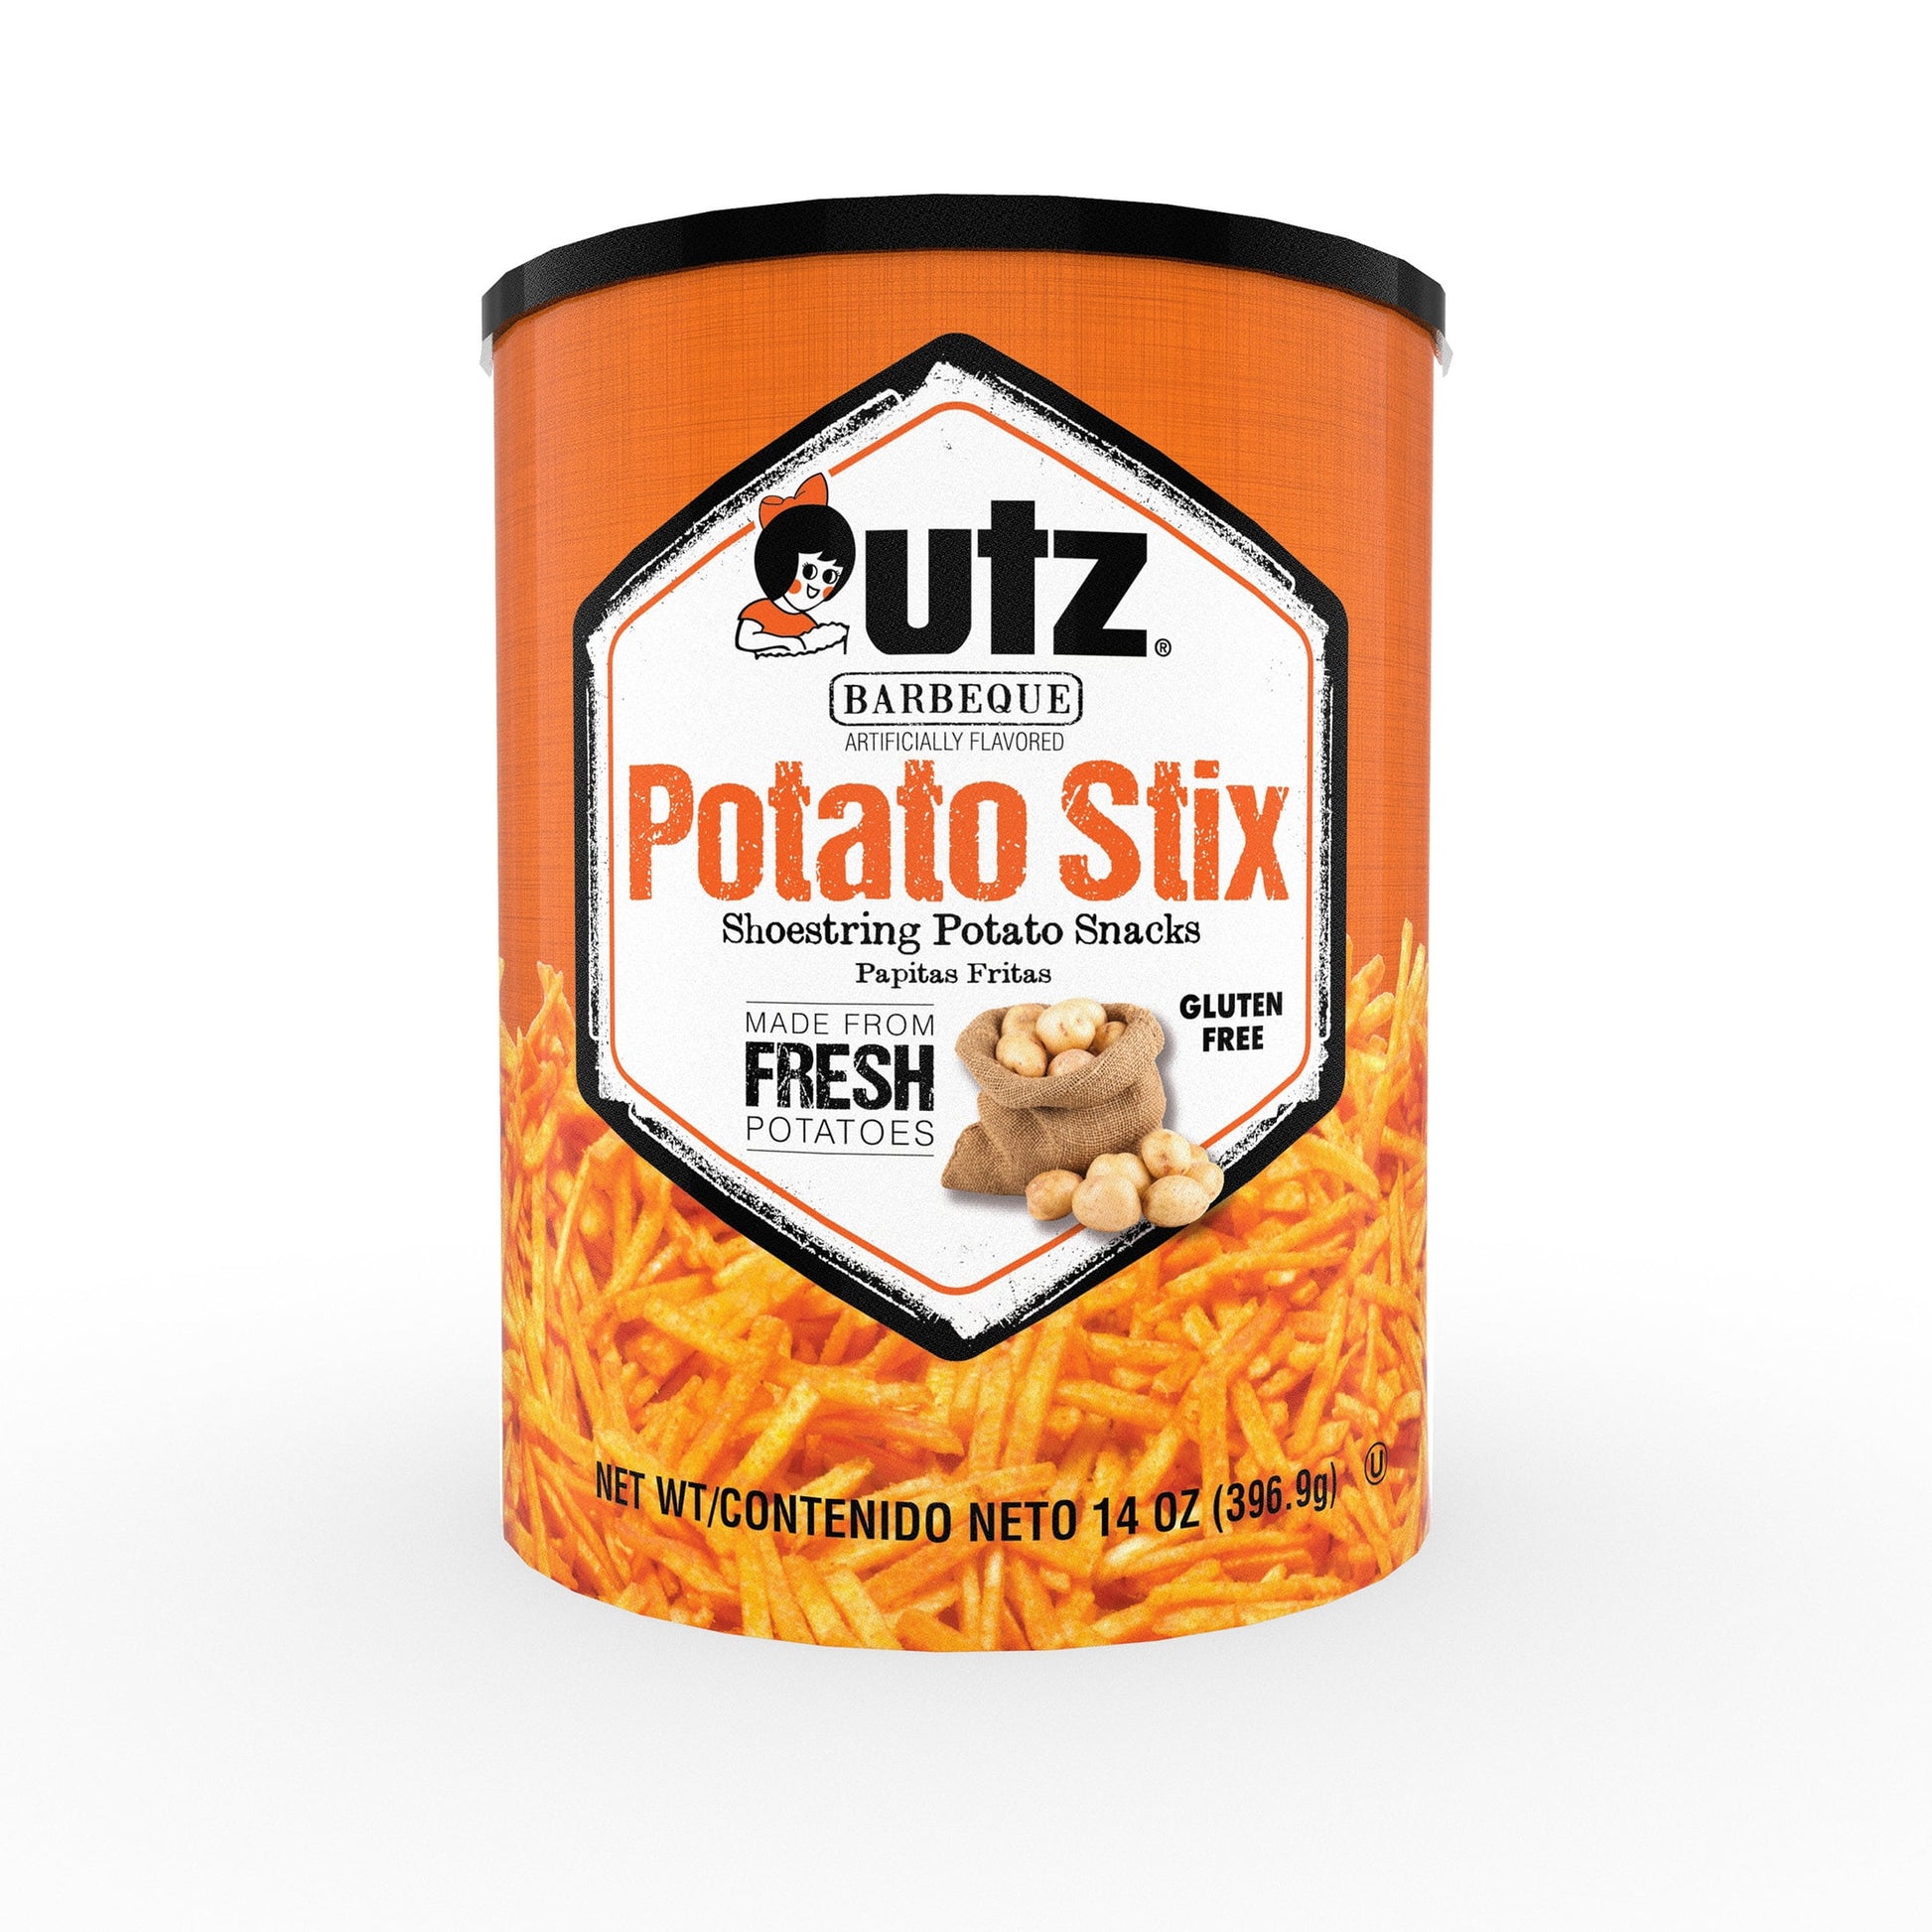 Barbeque Potato Stix, Gluten-Free, 14 Oz Canister